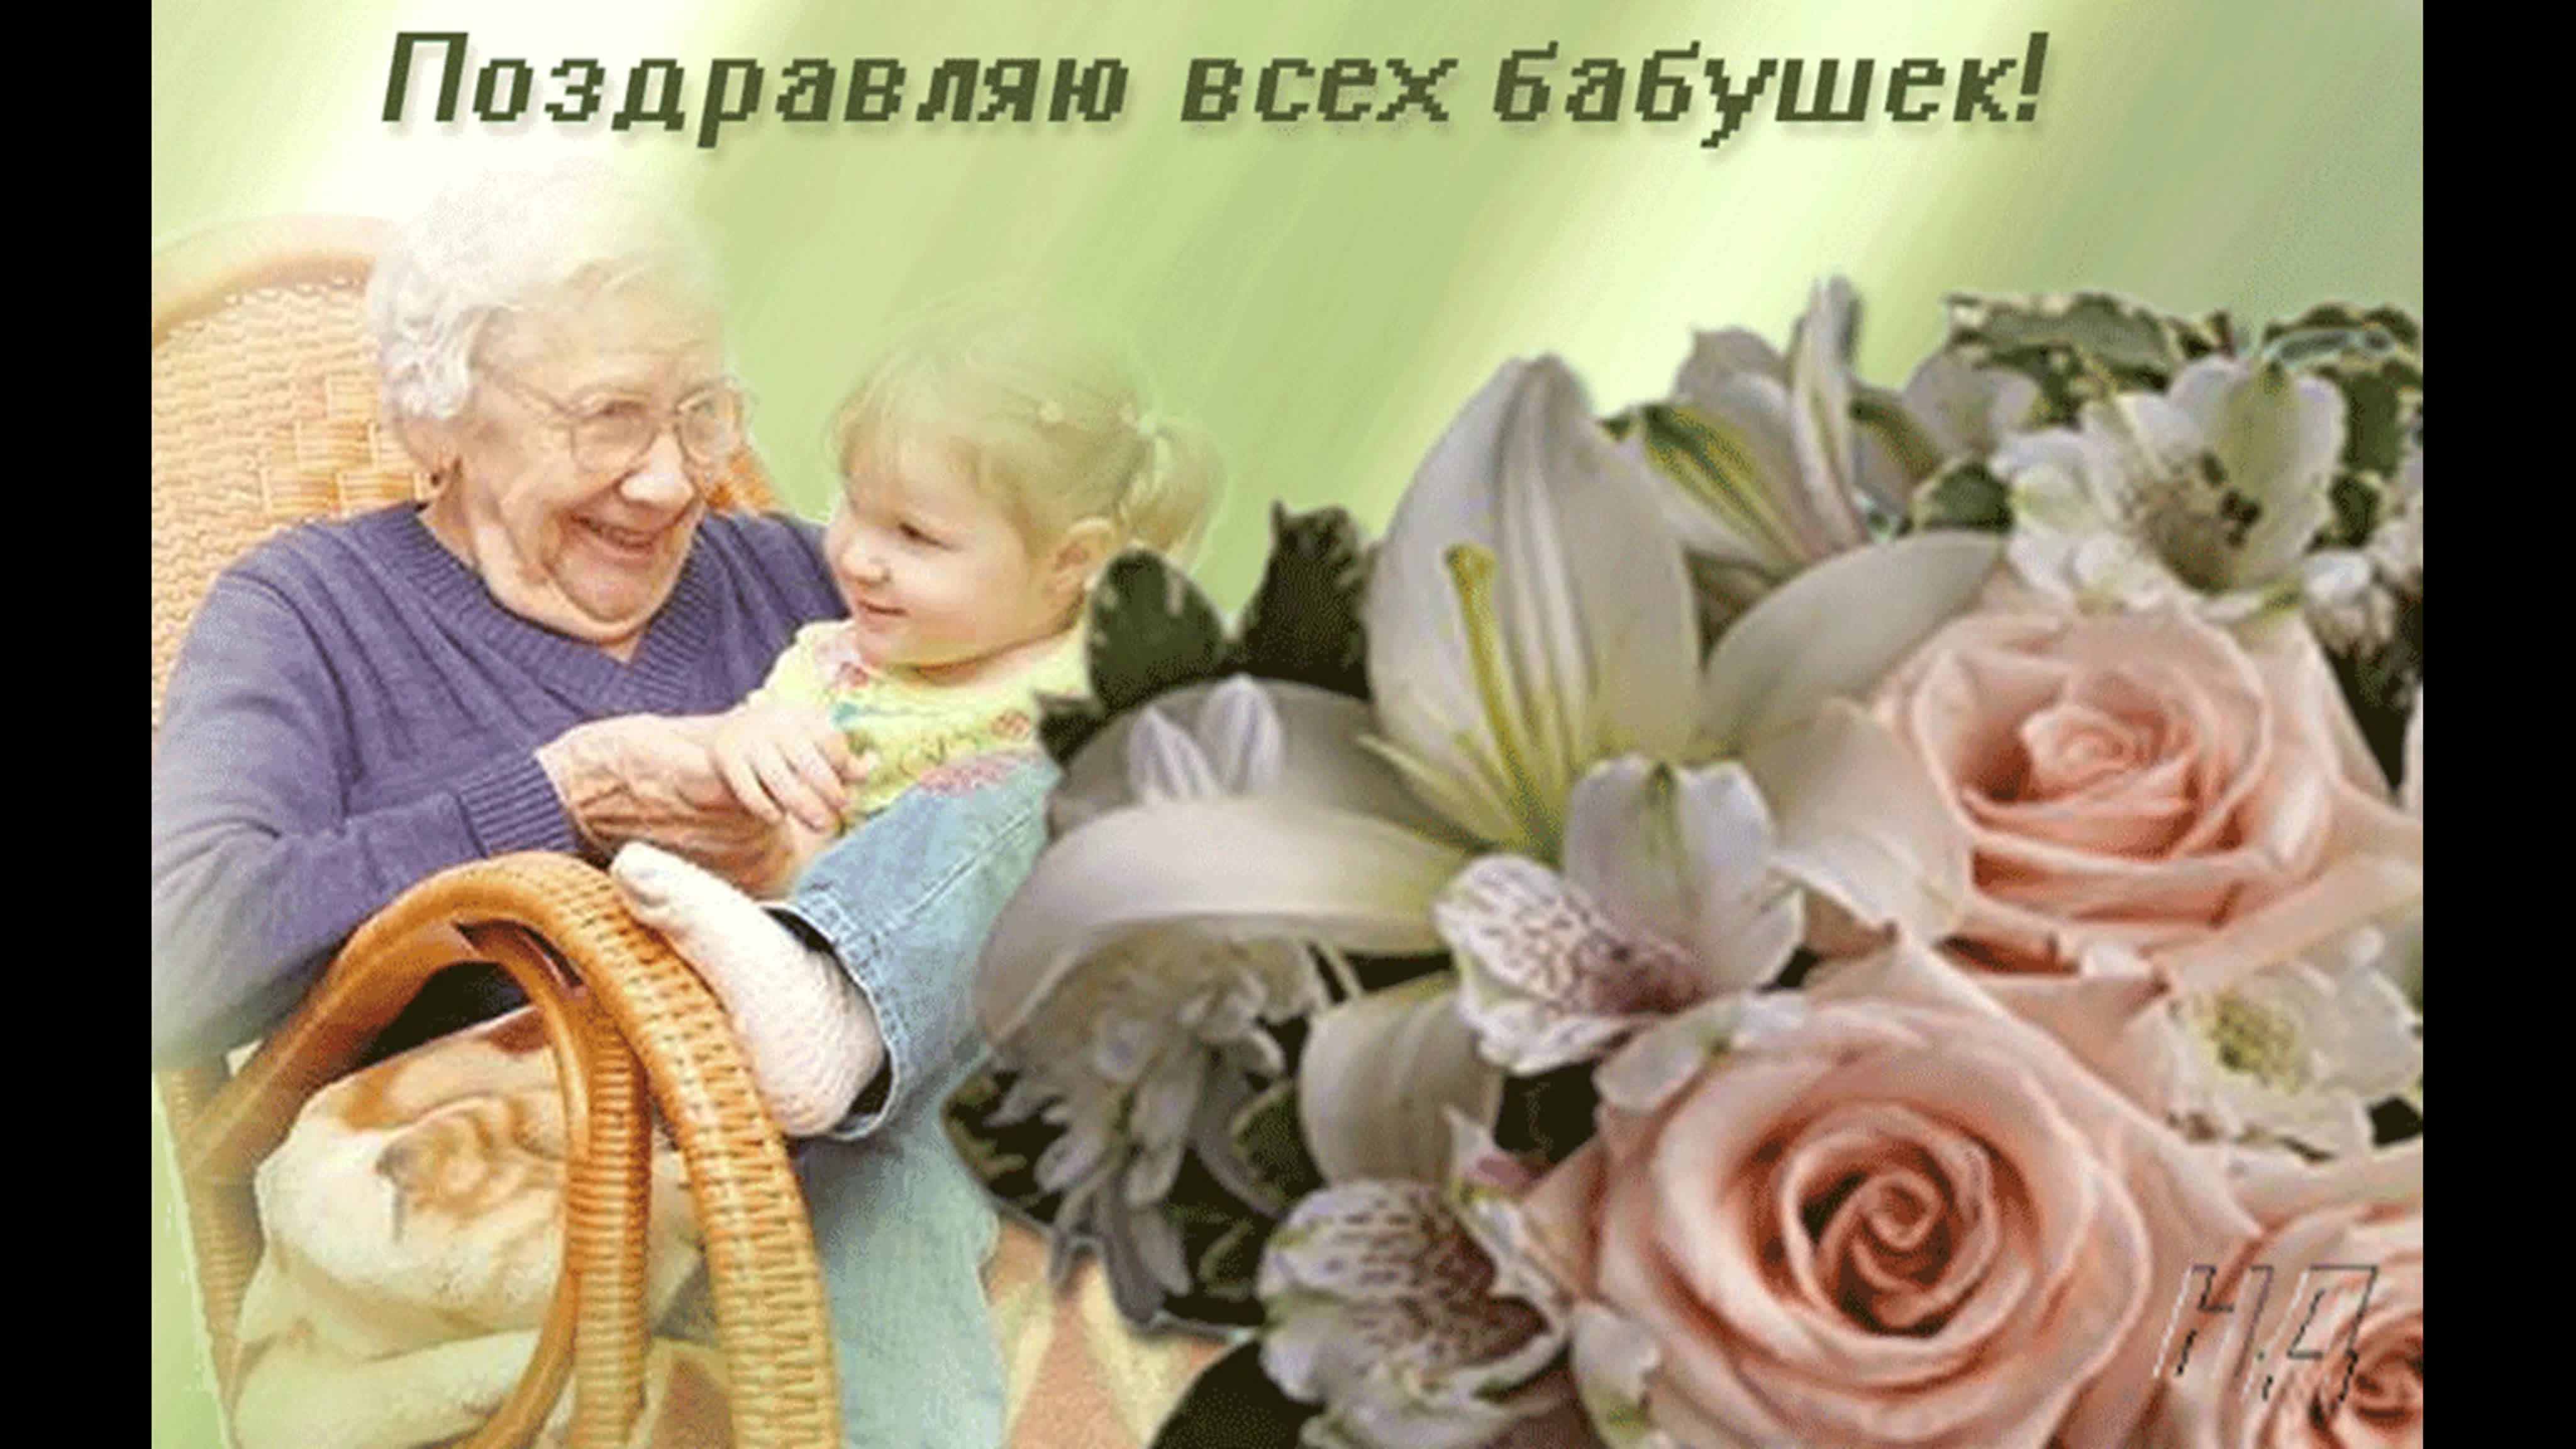 Когда бывает день бабушек. С днём бабушек поздравления. Открытки с днём бабушек. С днём бабушки поздравления красивые. Поздравление бабушке с днем бабушек.